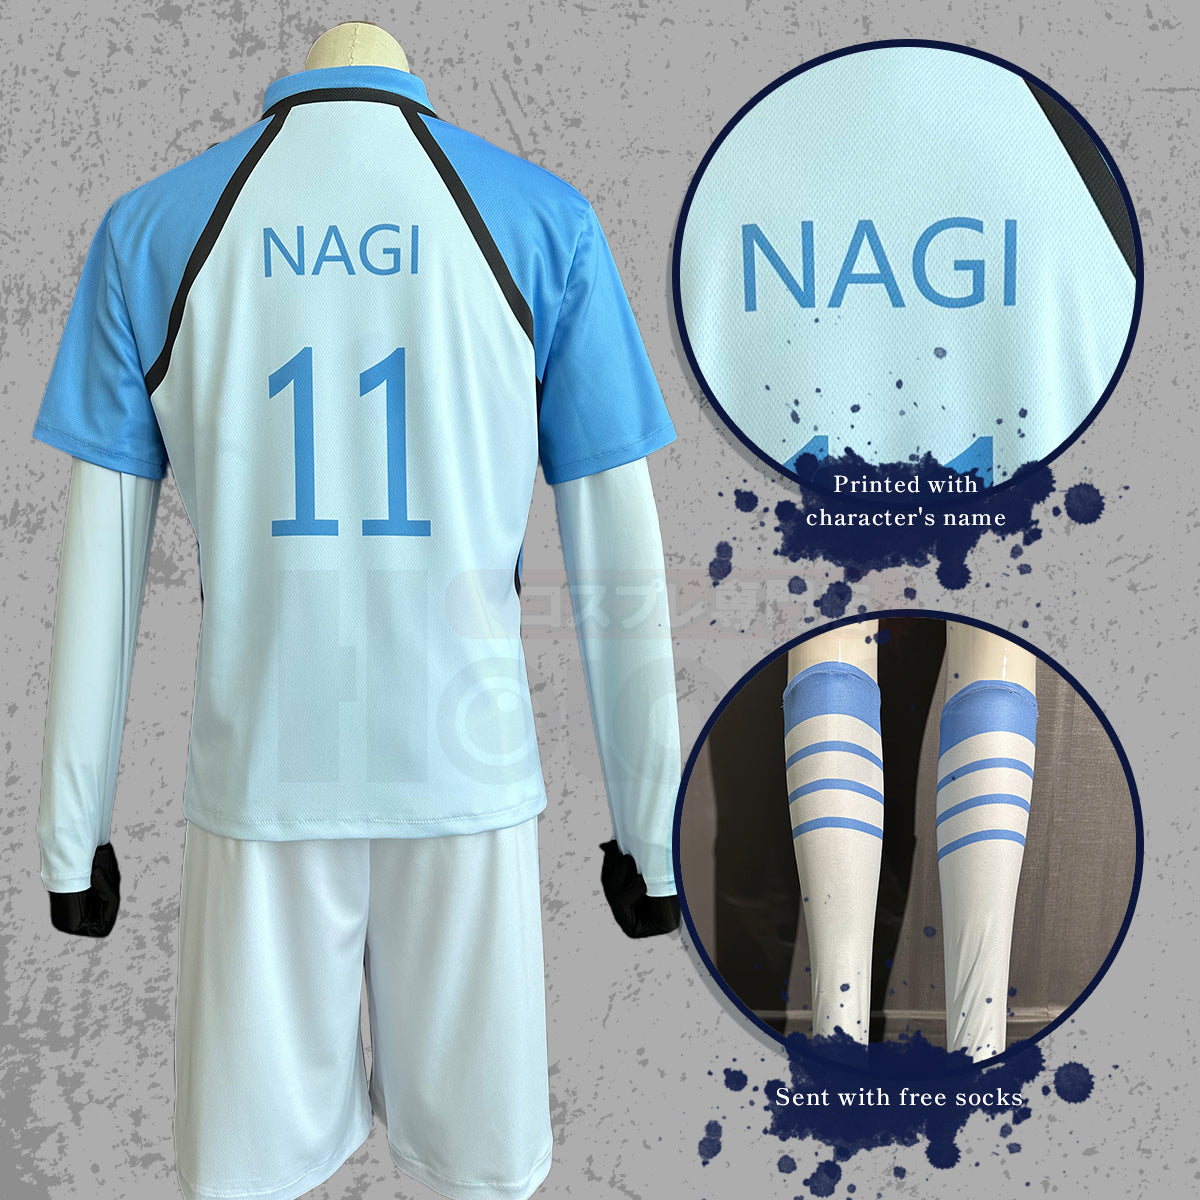 HOLOUN Blue Lock Anime No.11 Nagi Cosplay Costume Wig Man Shine City Jersey White Blue T-shirt Shorts Socks Top Football Soccer Uniform